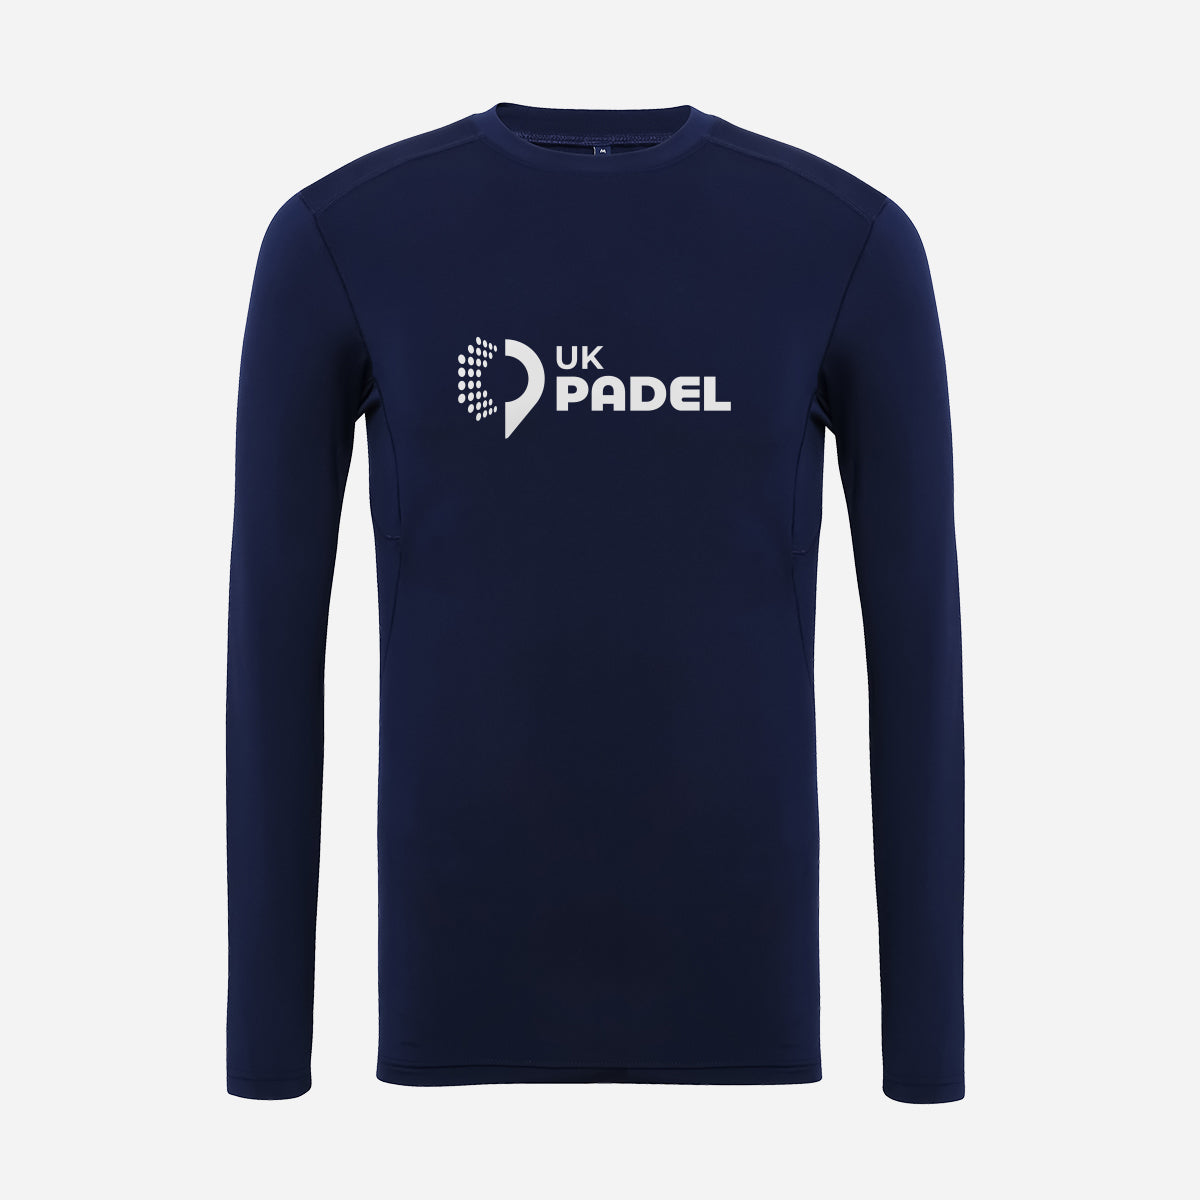 UK Padel Cool long sleeve baselayer ( UK PADEL large front logo)